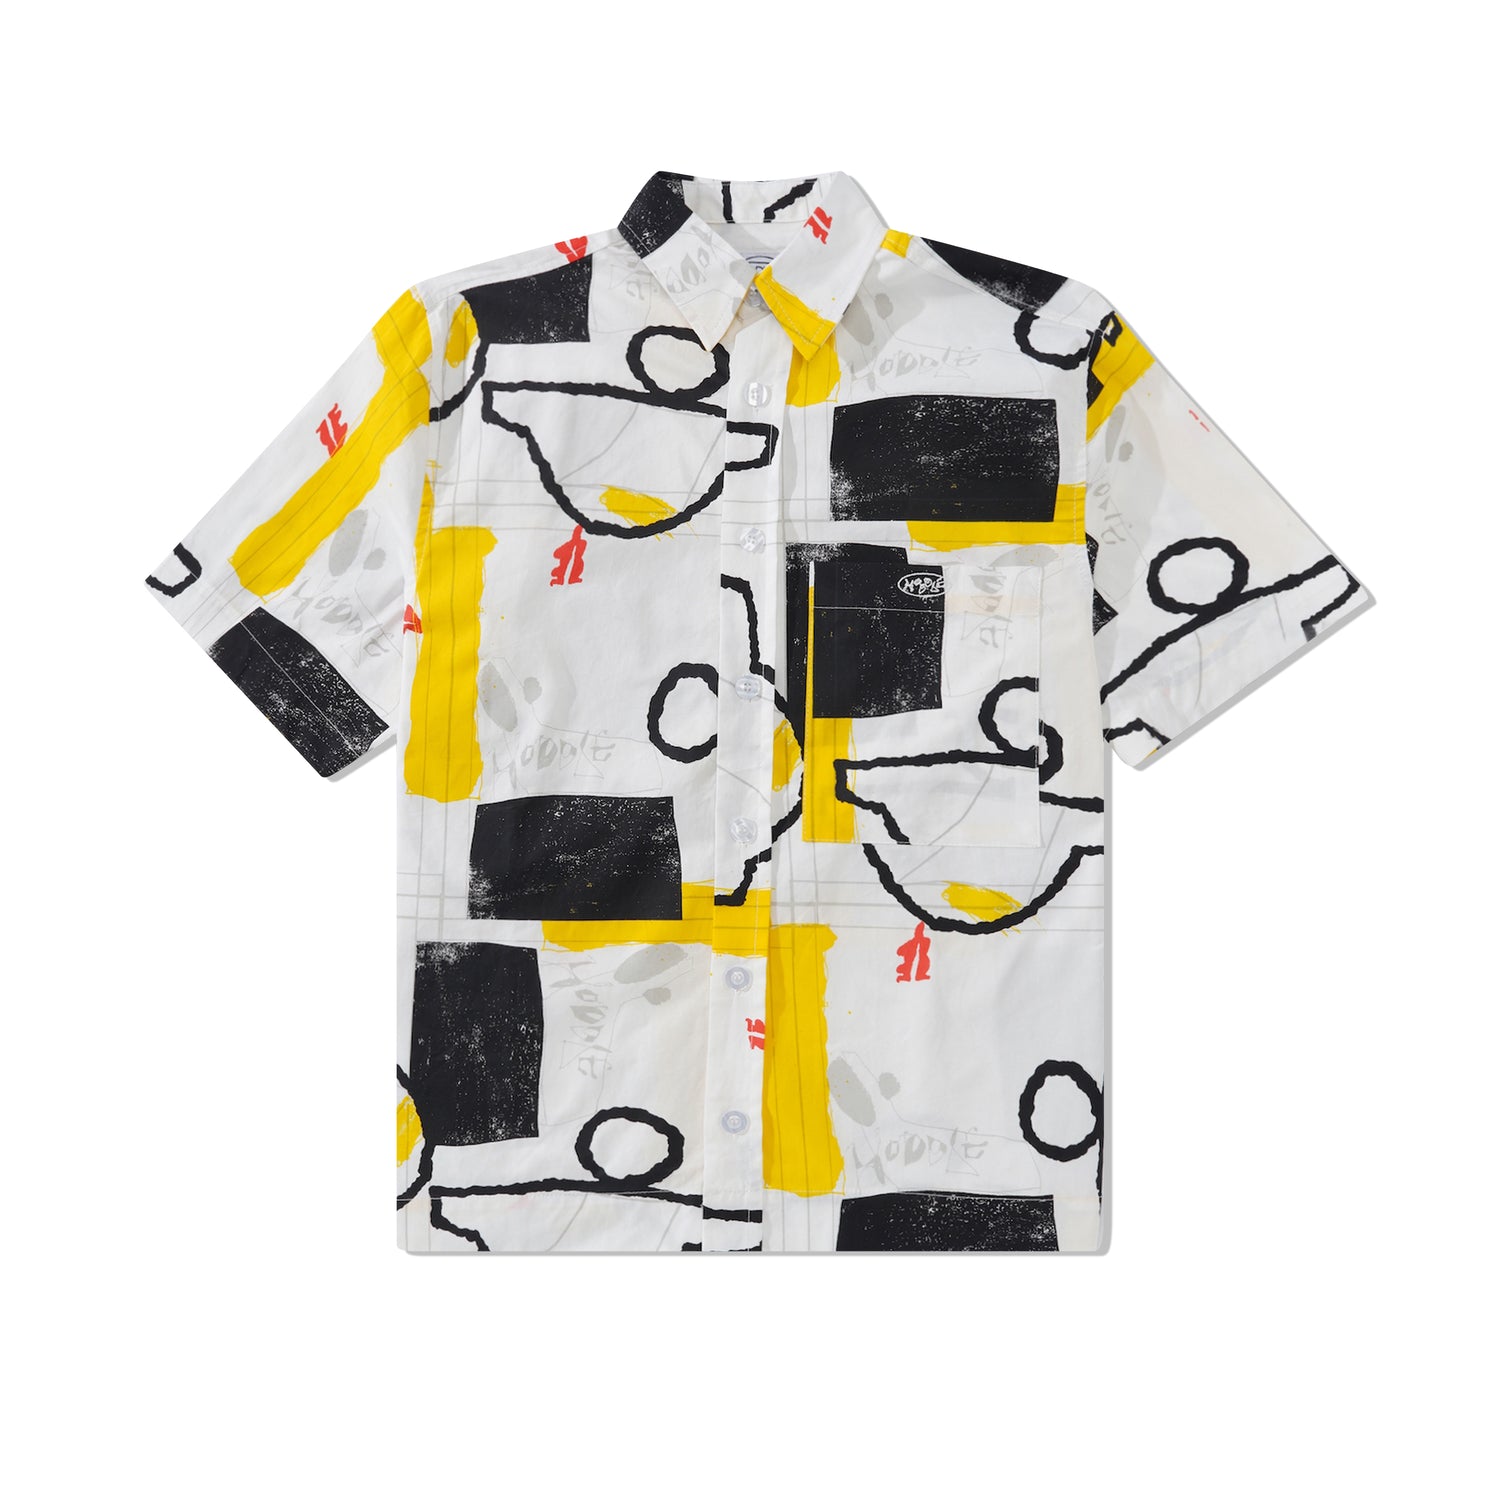 Faire S/S Shirt, Yellow / Black / White